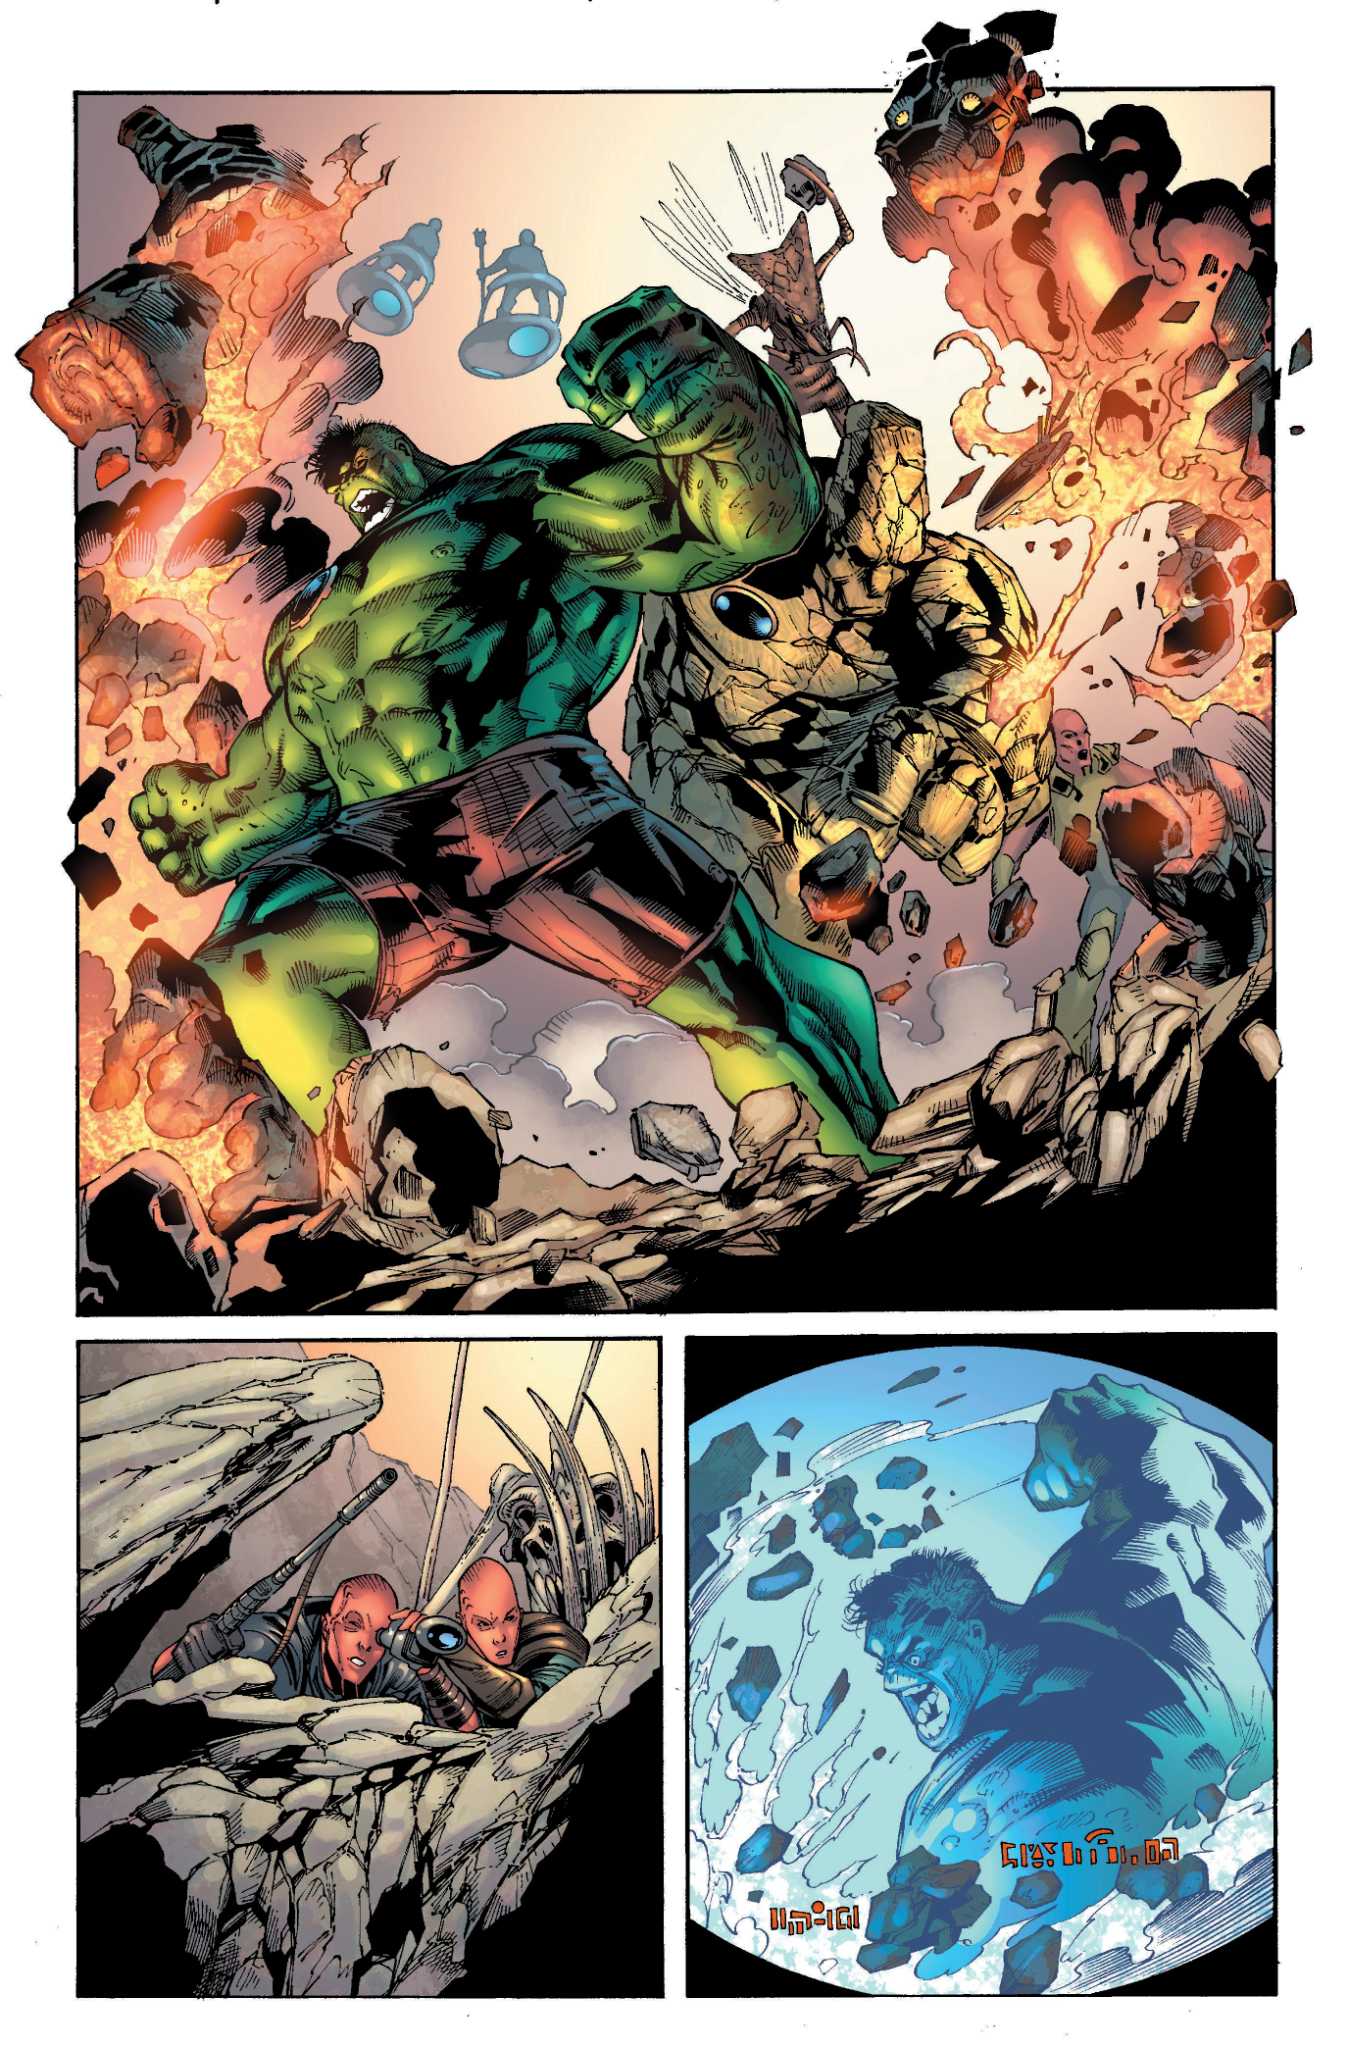 The Comic That Inspired Hulk's 'Thor: Ragnarok' Look